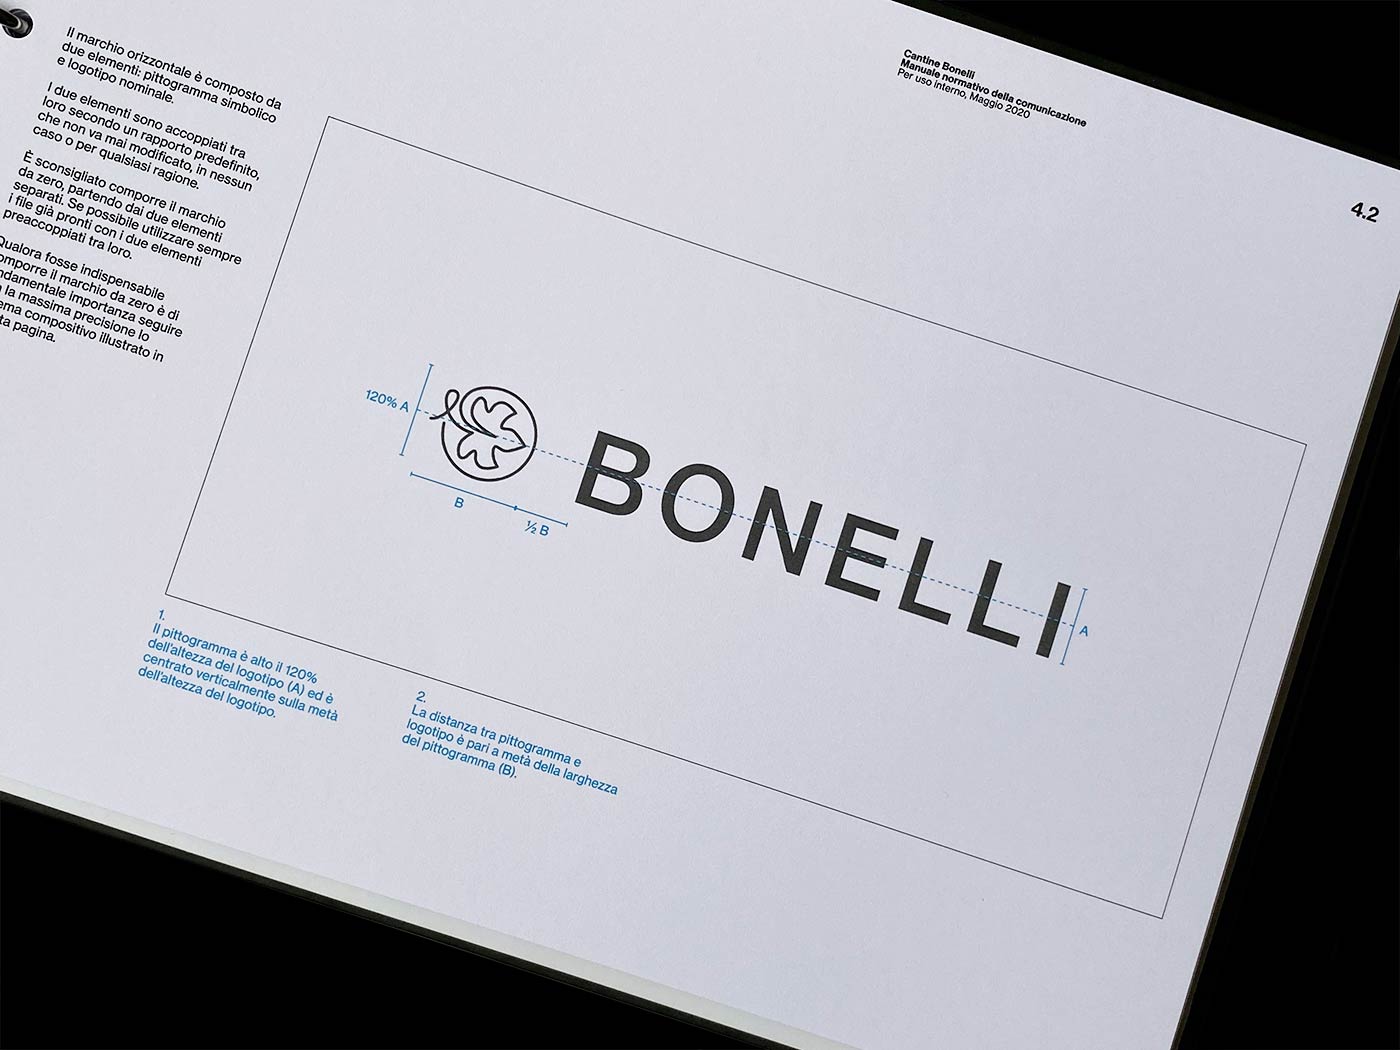 bonelli standards manual